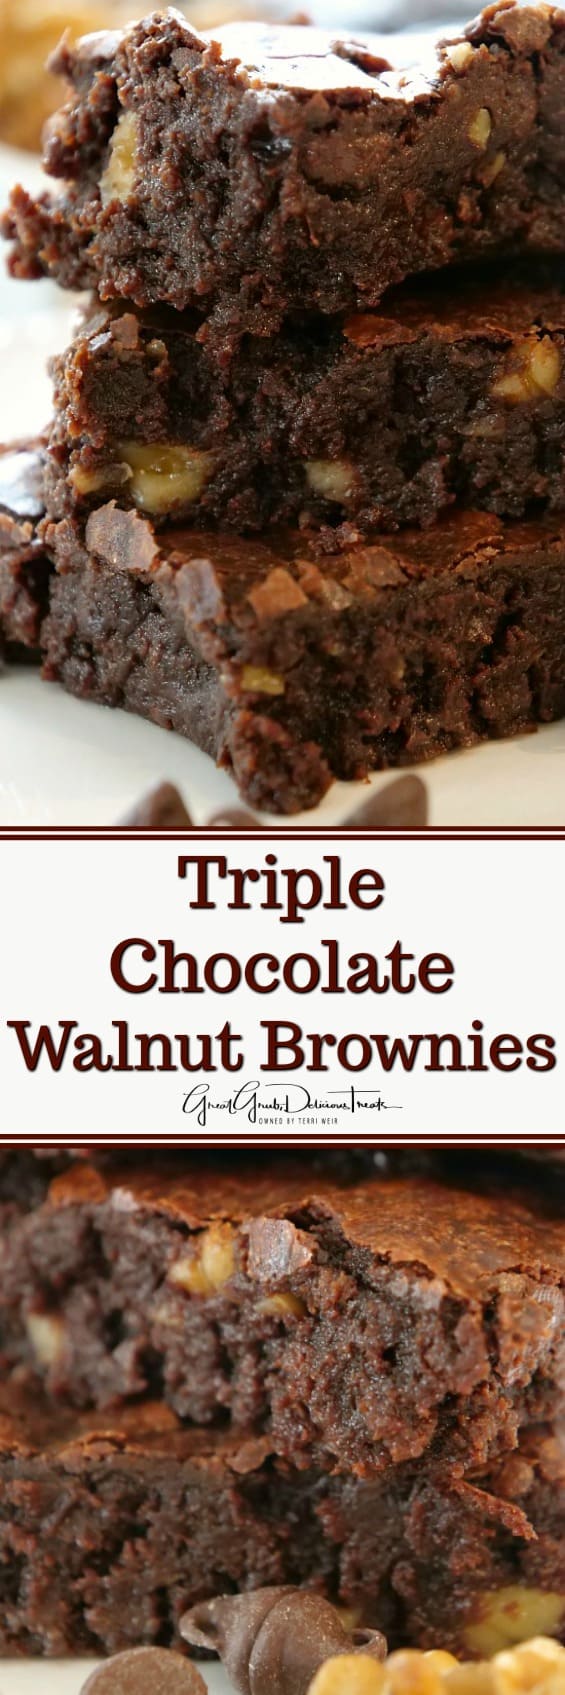 Triple Chocolate Walnut Brownies